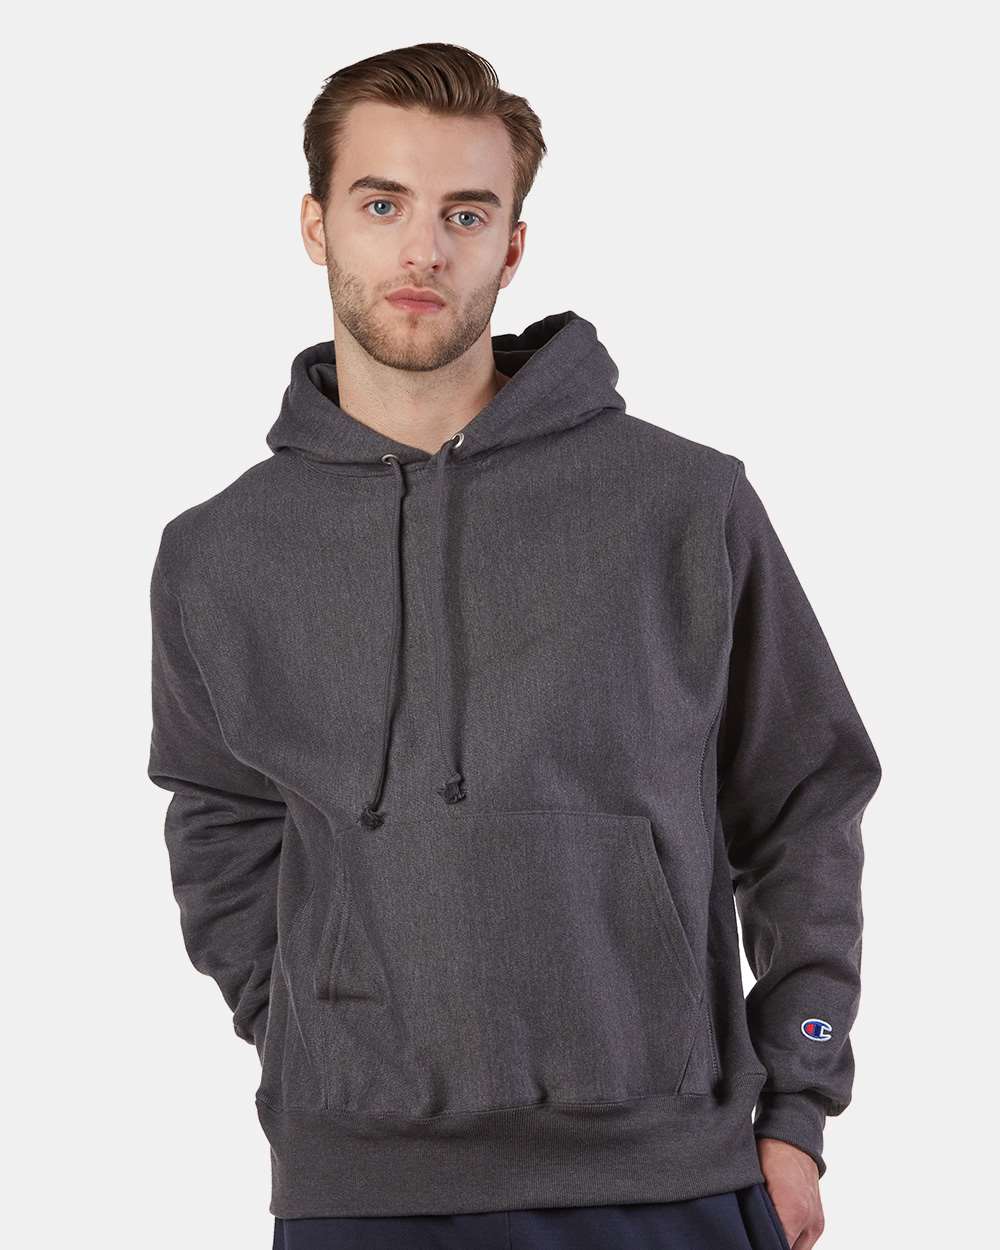 Reverse Weave Hooded Sweatshirt - Champion S101